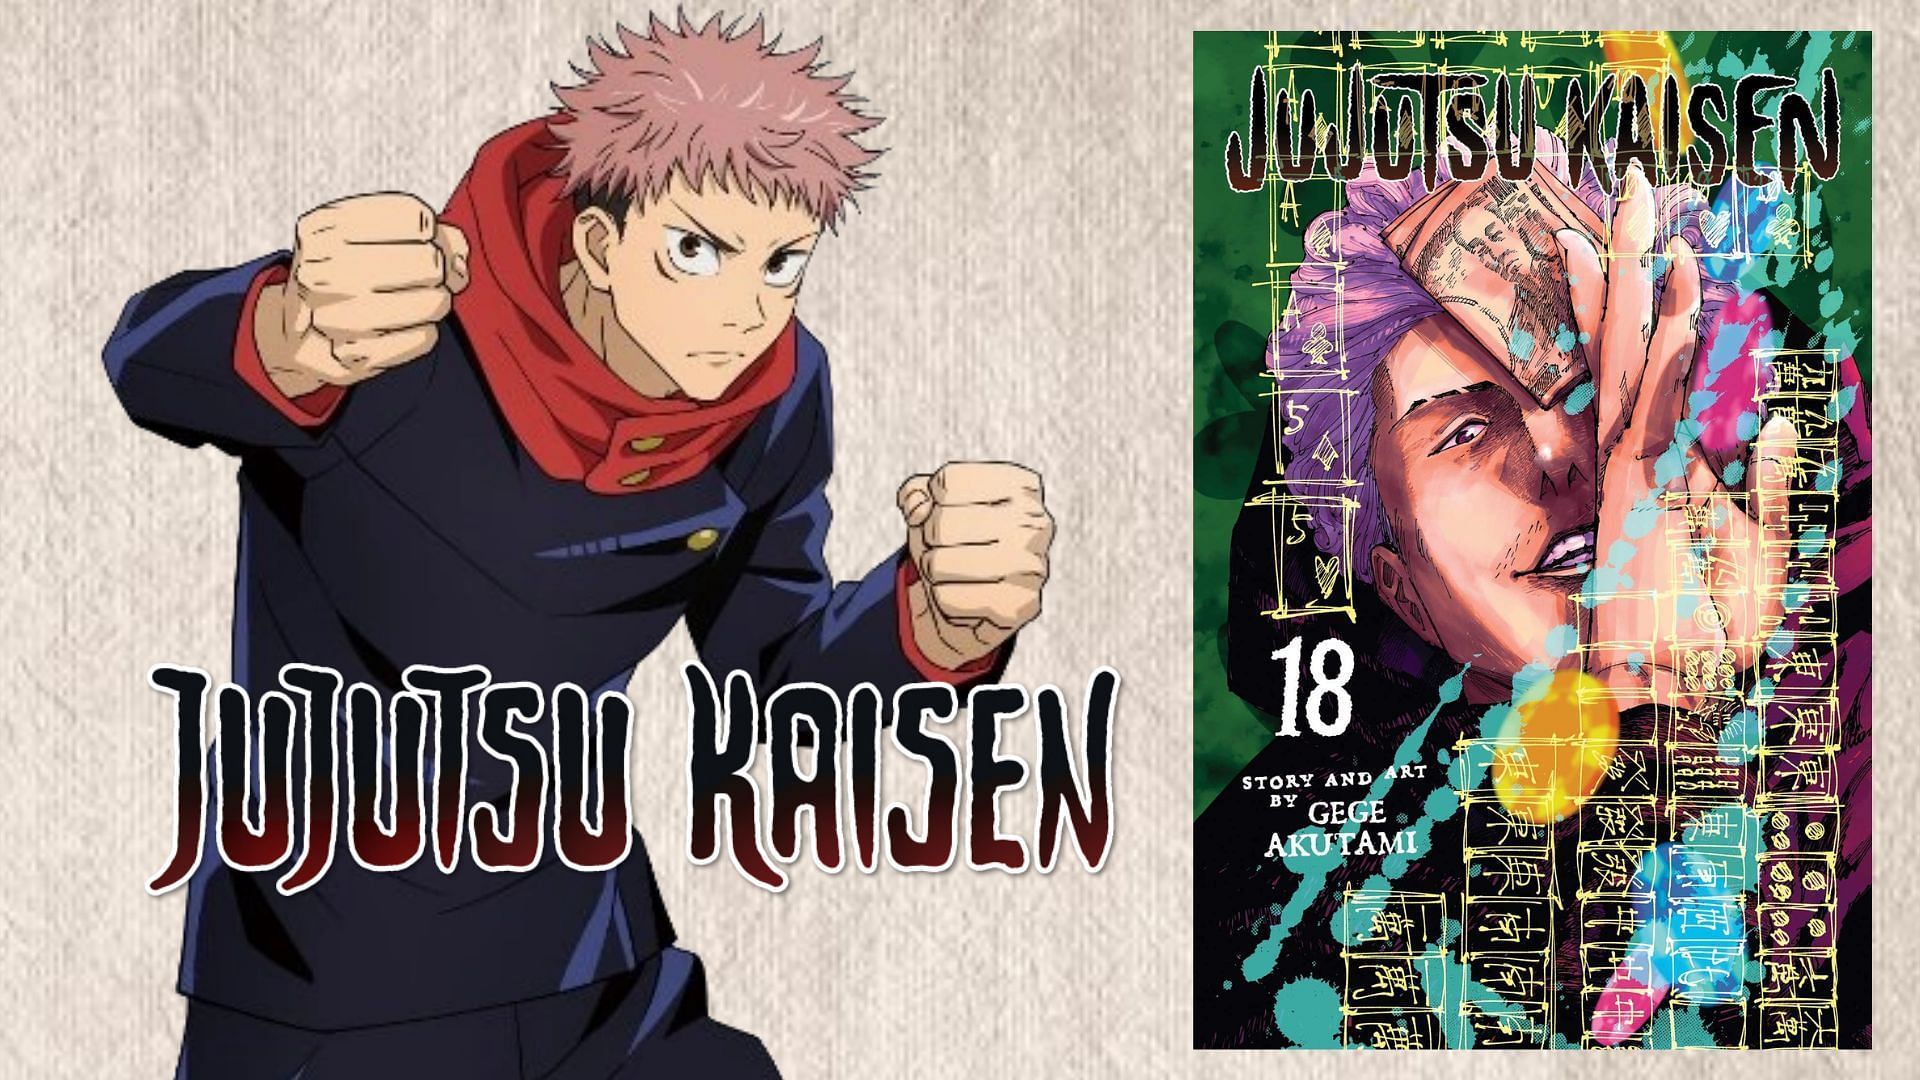 Jujutsu Kaisen Volume 22 Vol.22 Newly Issue JUMP Comic Manga Japanese Japan  NEW